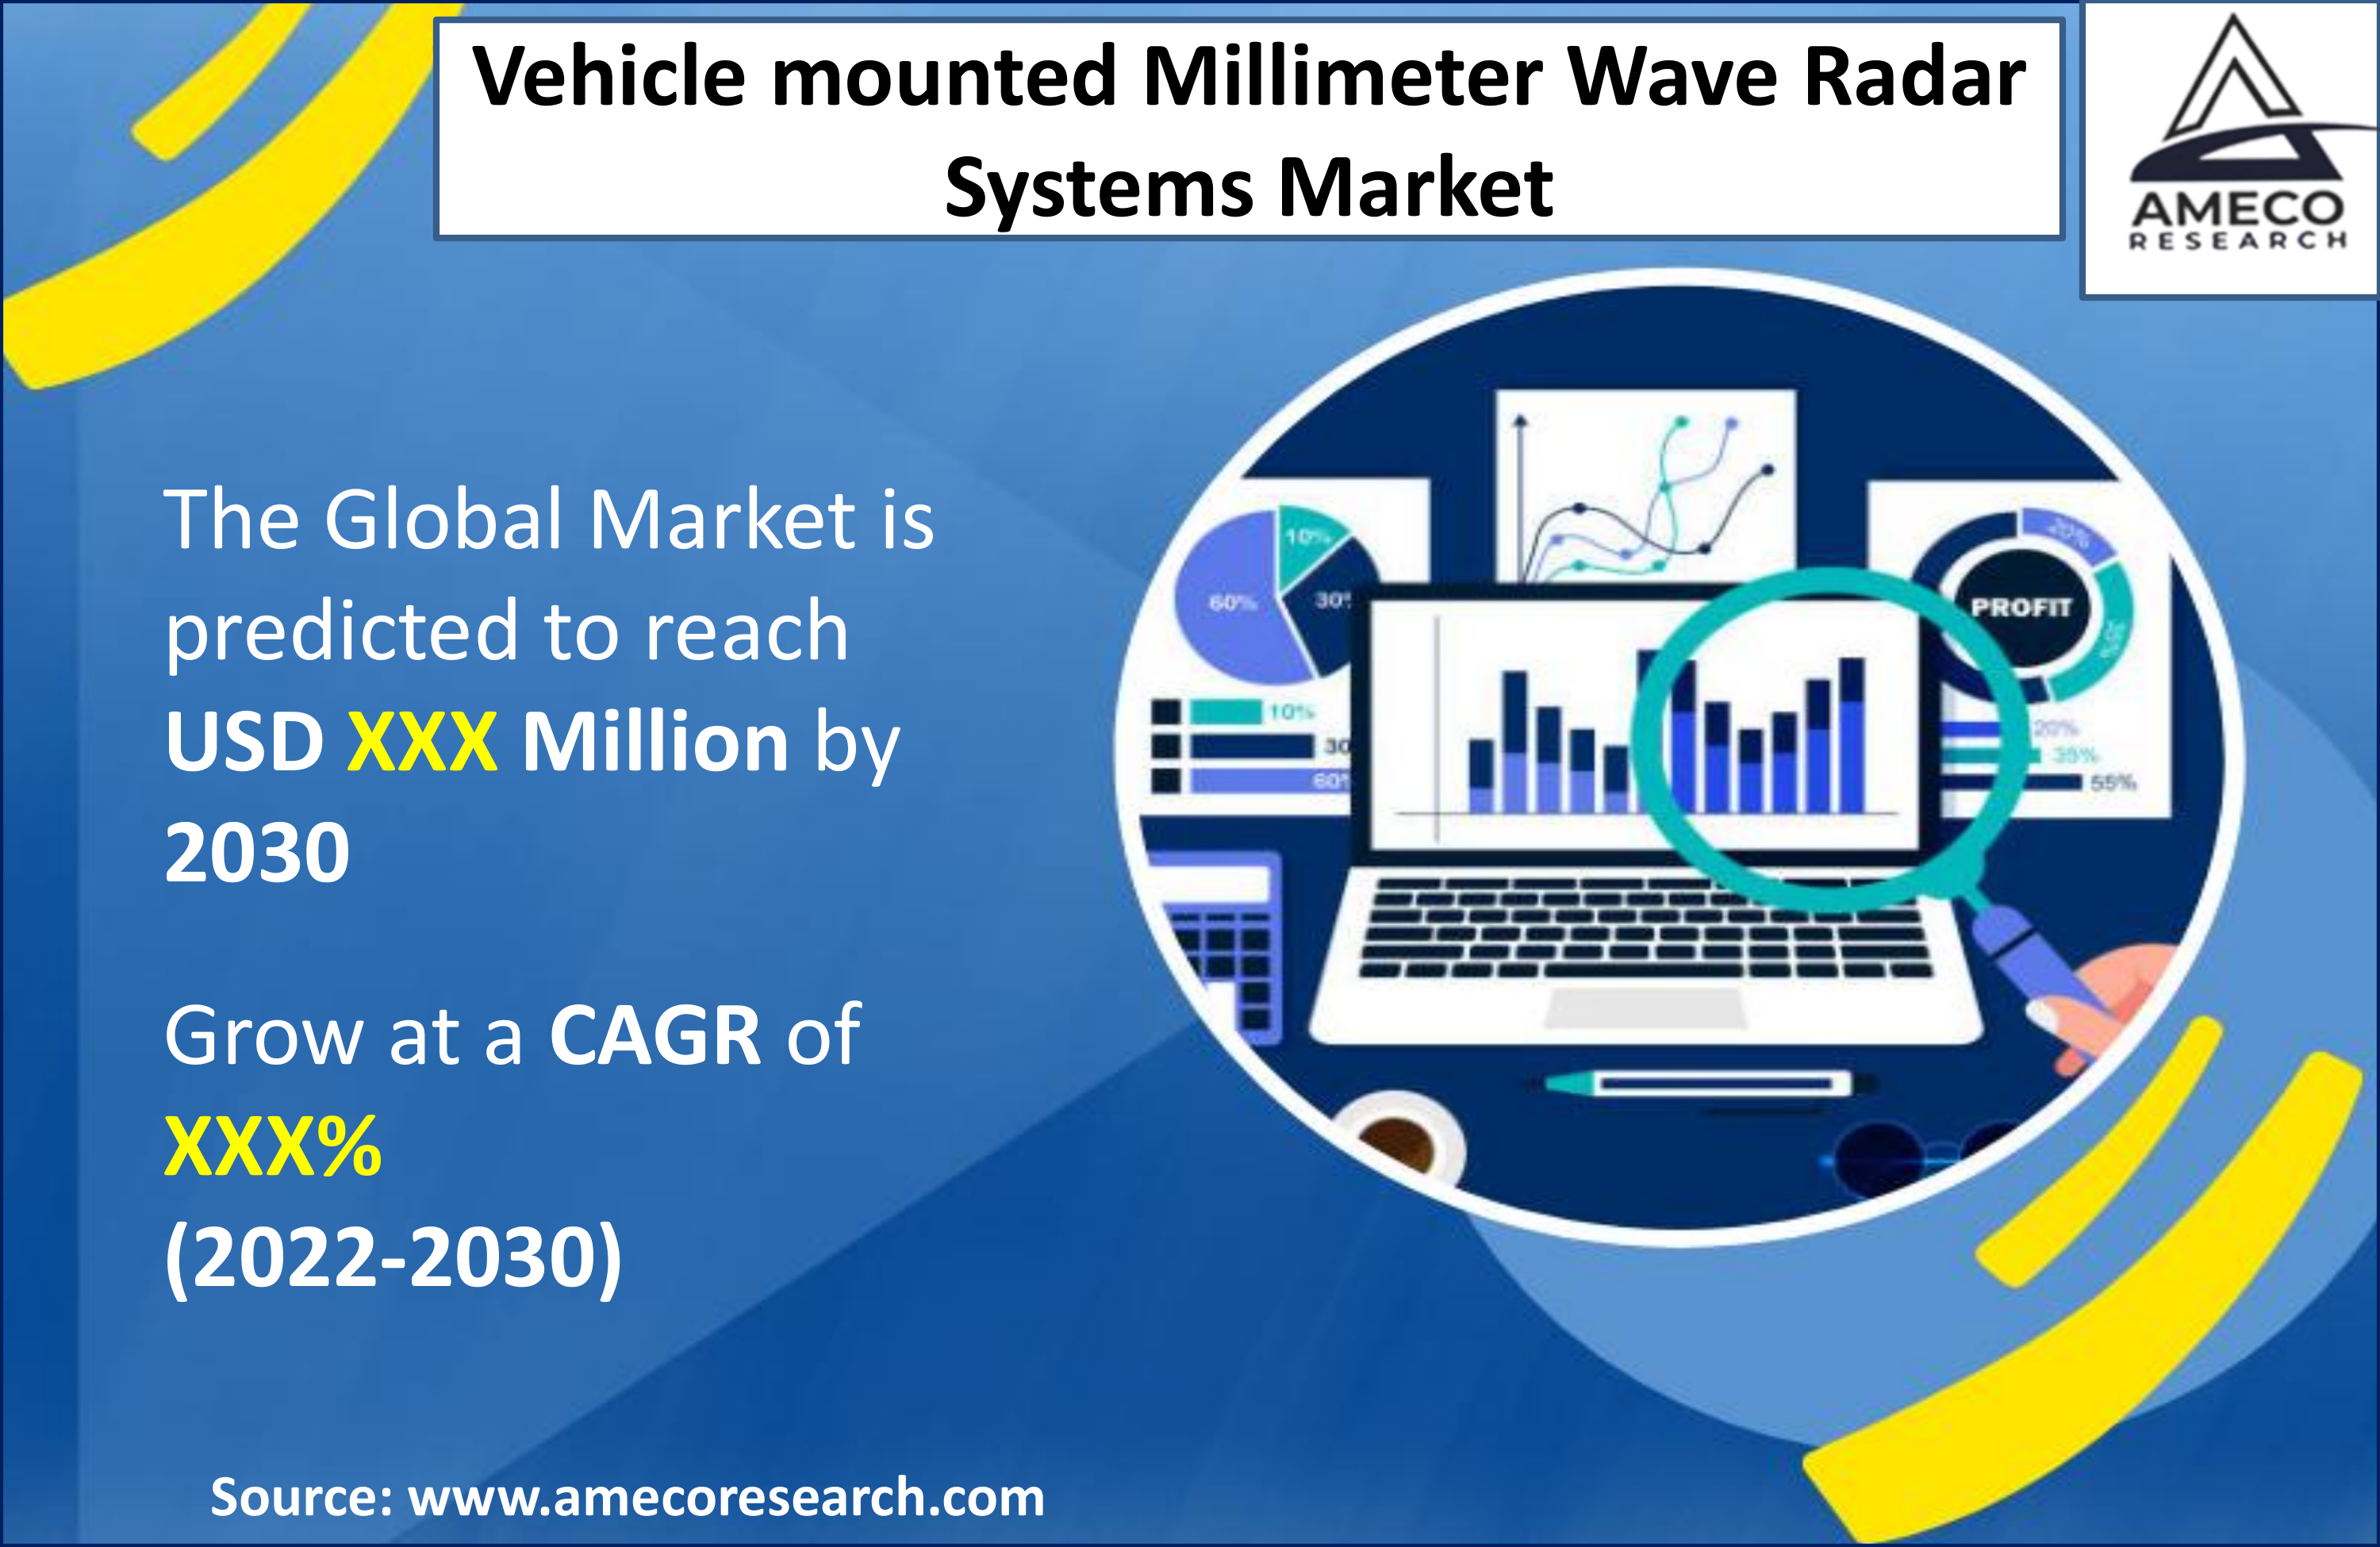 Vehicle mounted Millimeter Wave Radar Systems Market